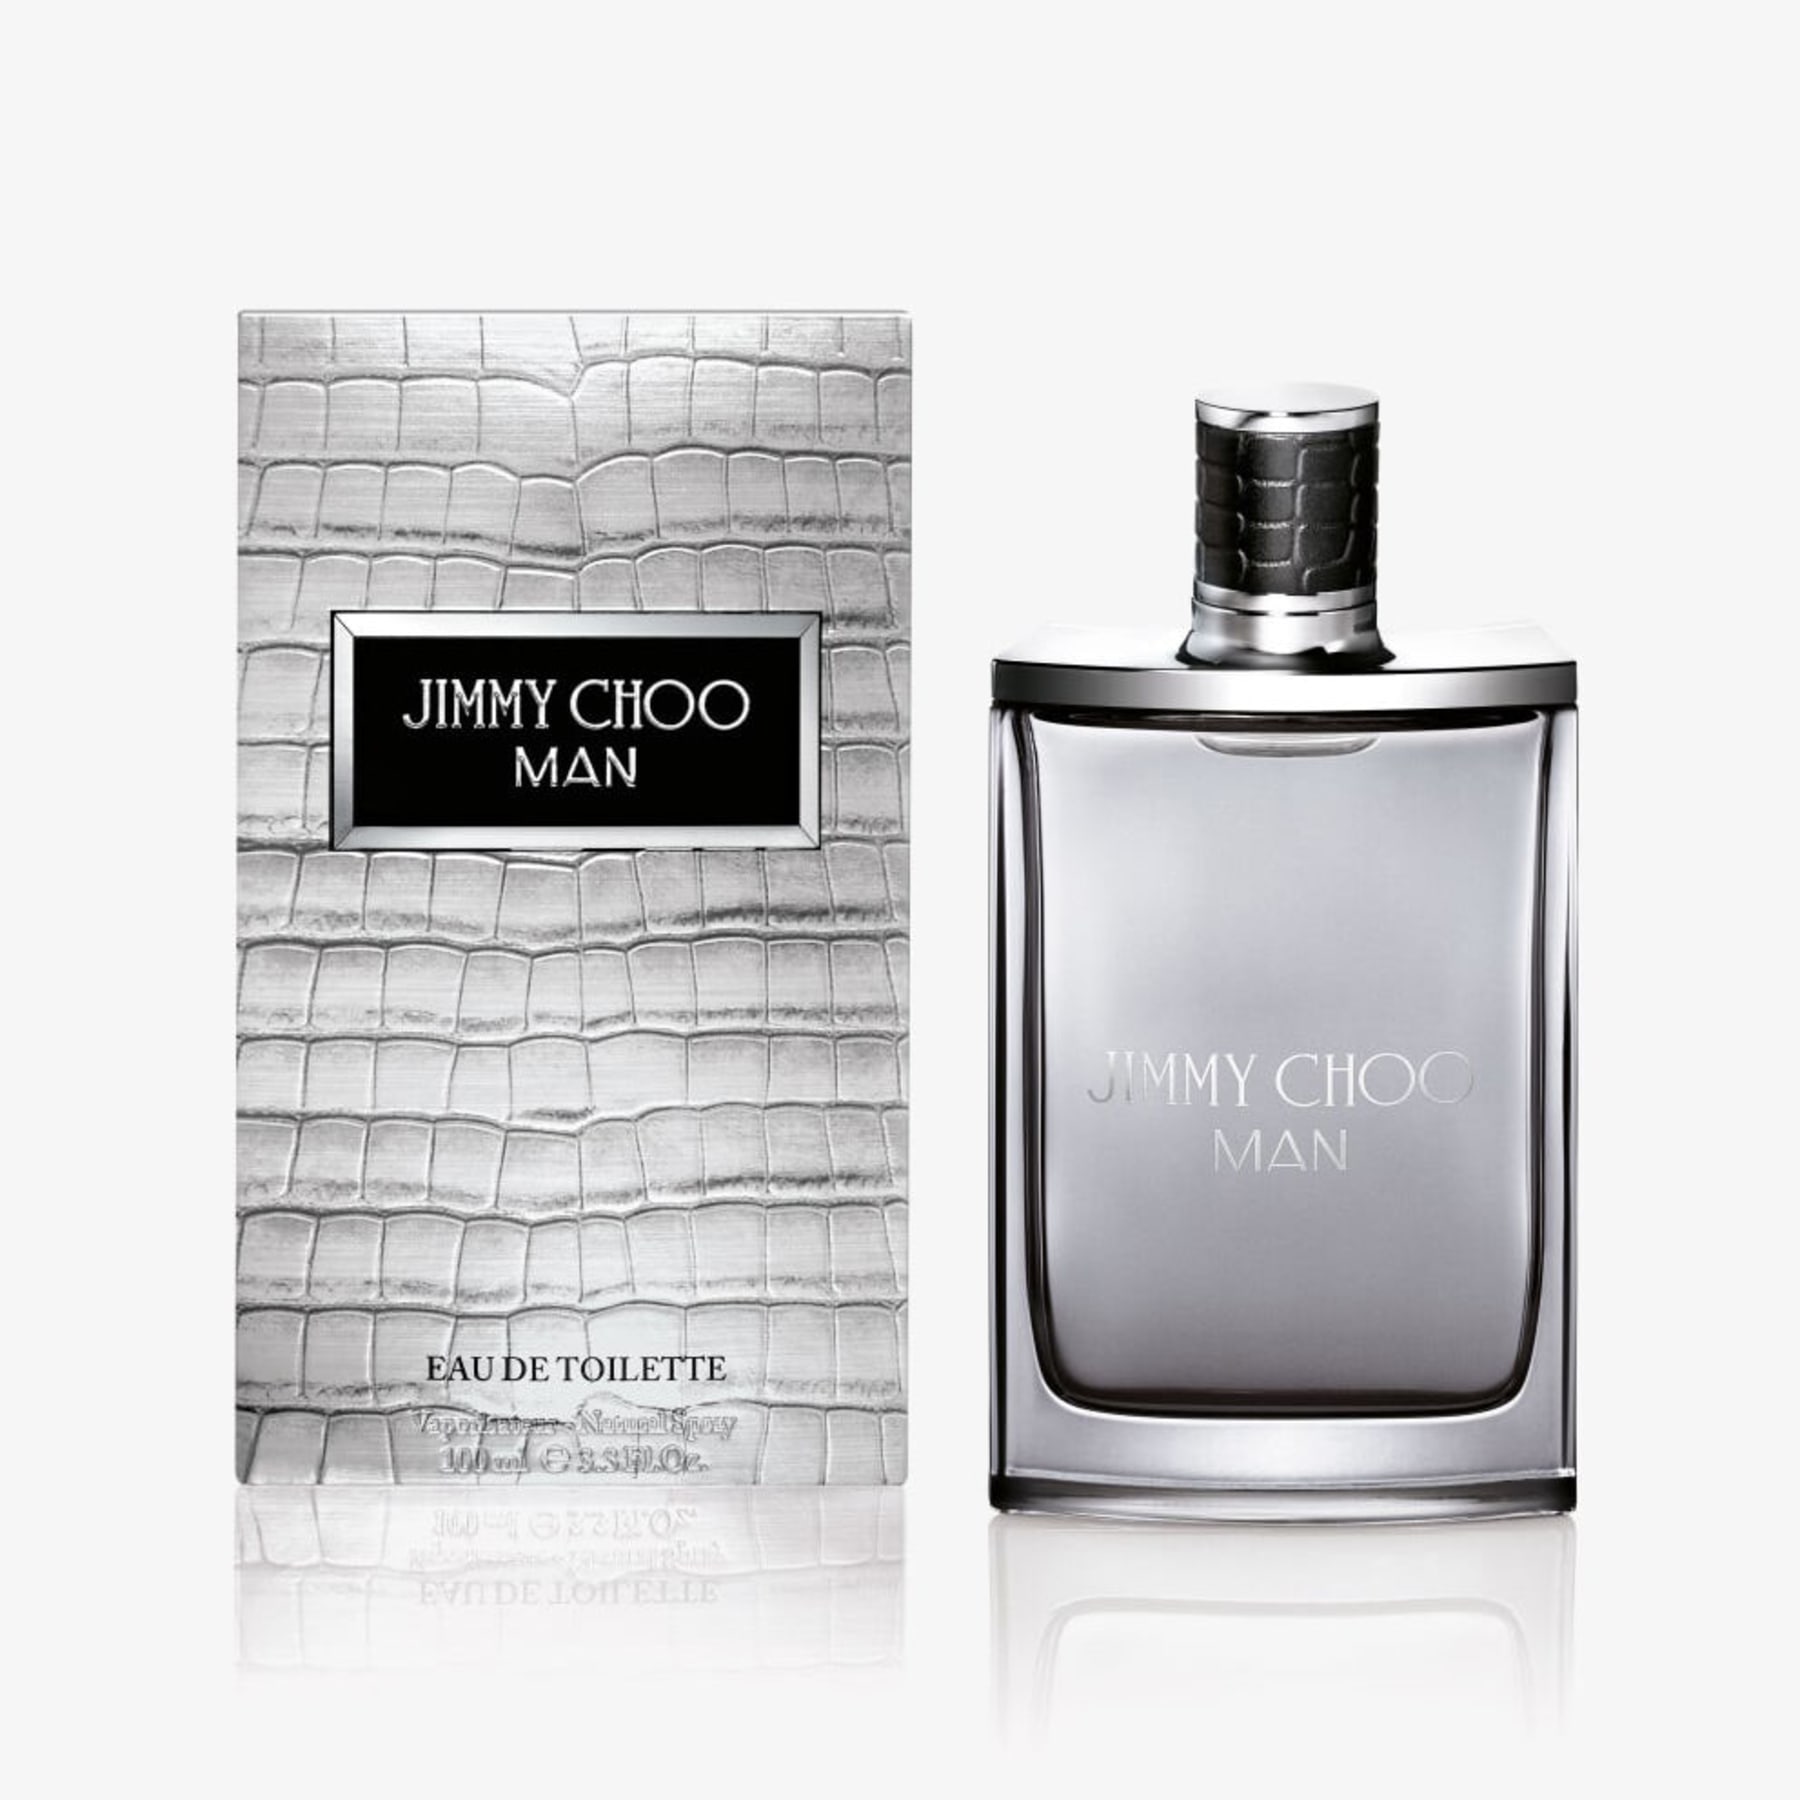 Jimmy Choo Fragrance Company Store | website.jkuat.ac.ke